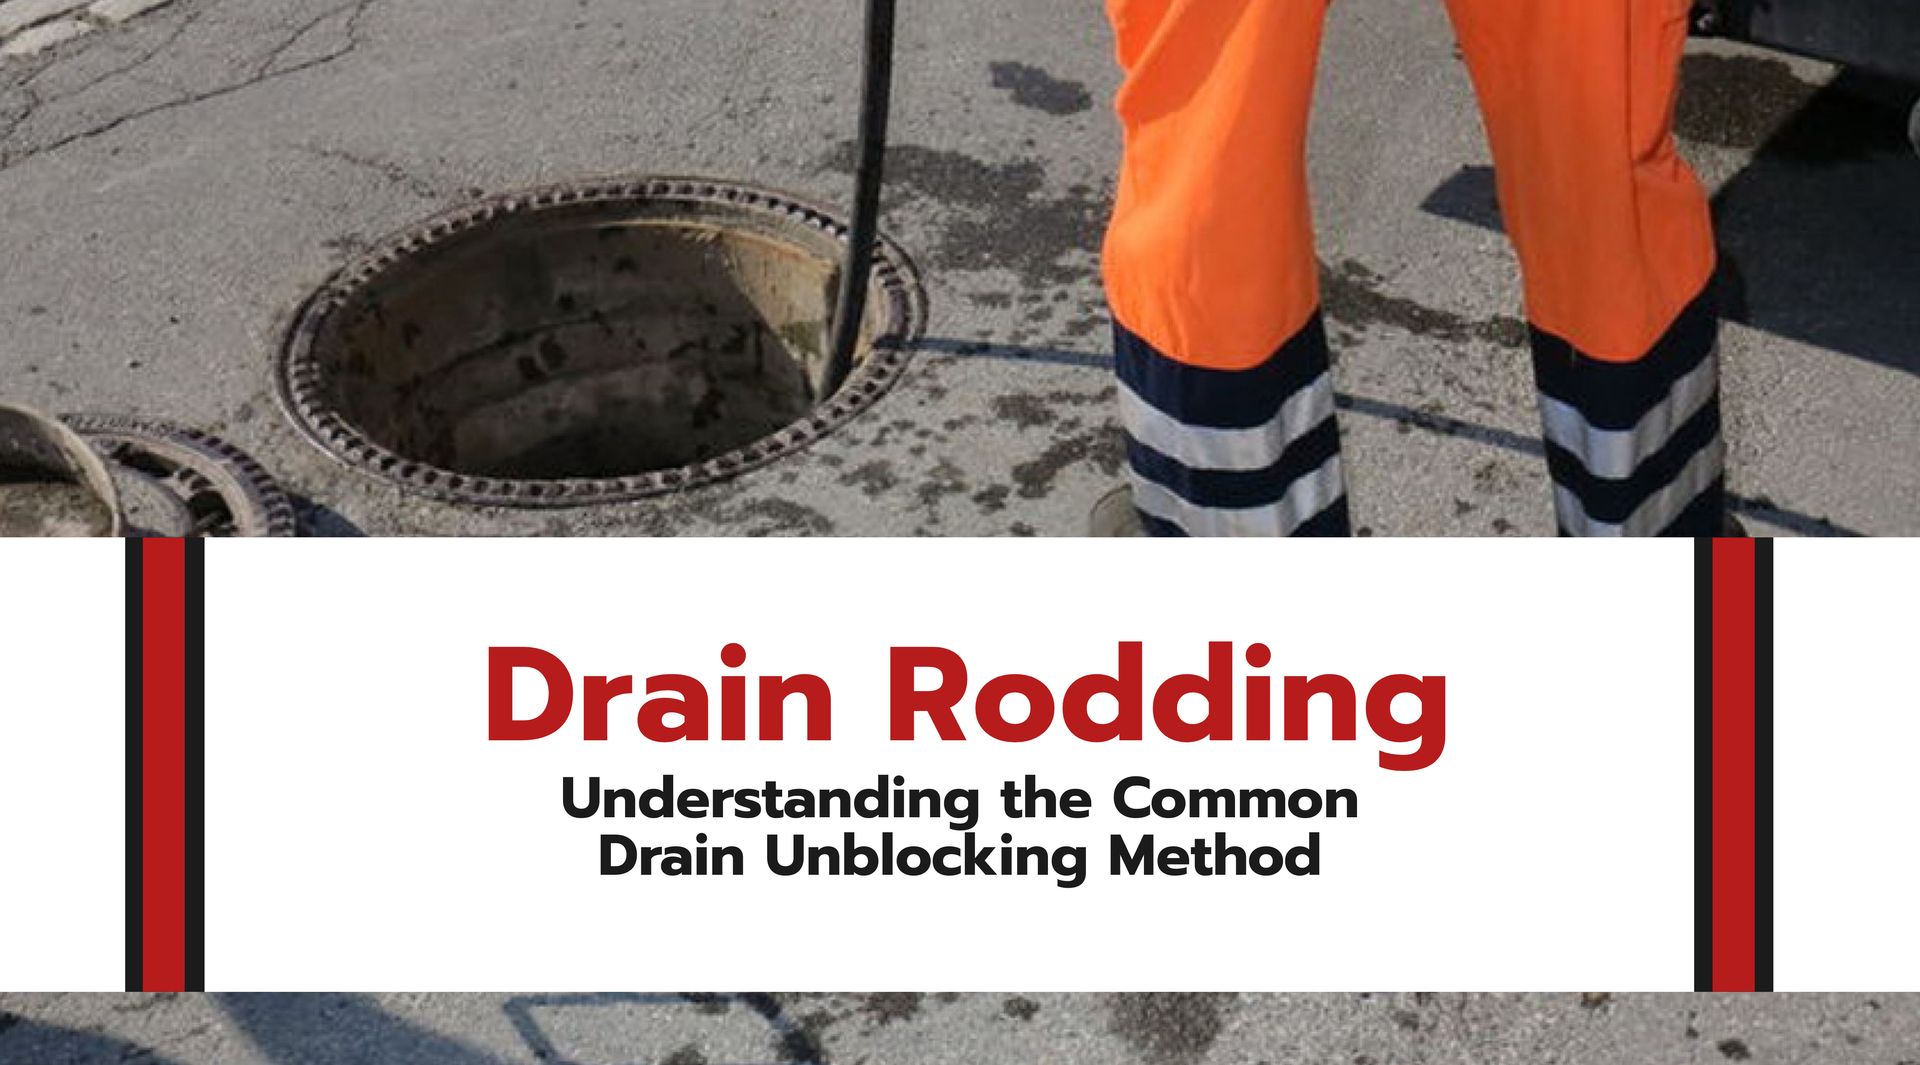 Drain Rodding: Understanding the Common Drain Unblocking Method and Alternatives